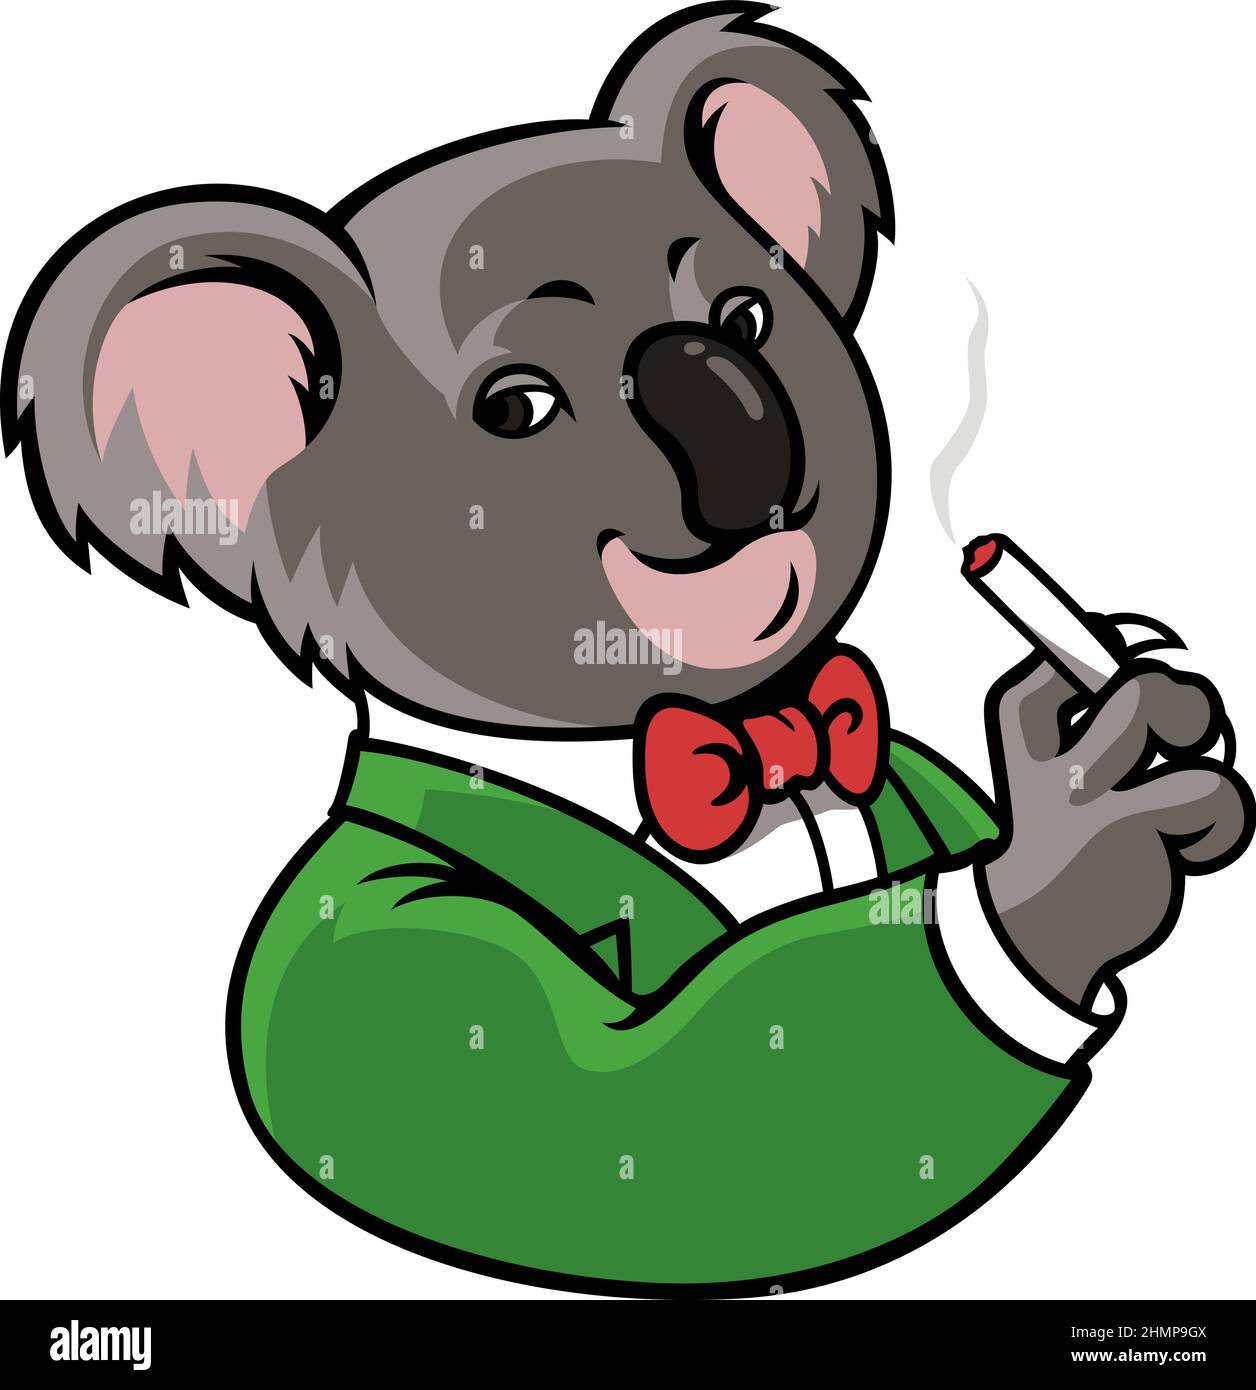 Gentle Koala in Suits Holding A Cigarette Cartoon Character Design Stock Vector